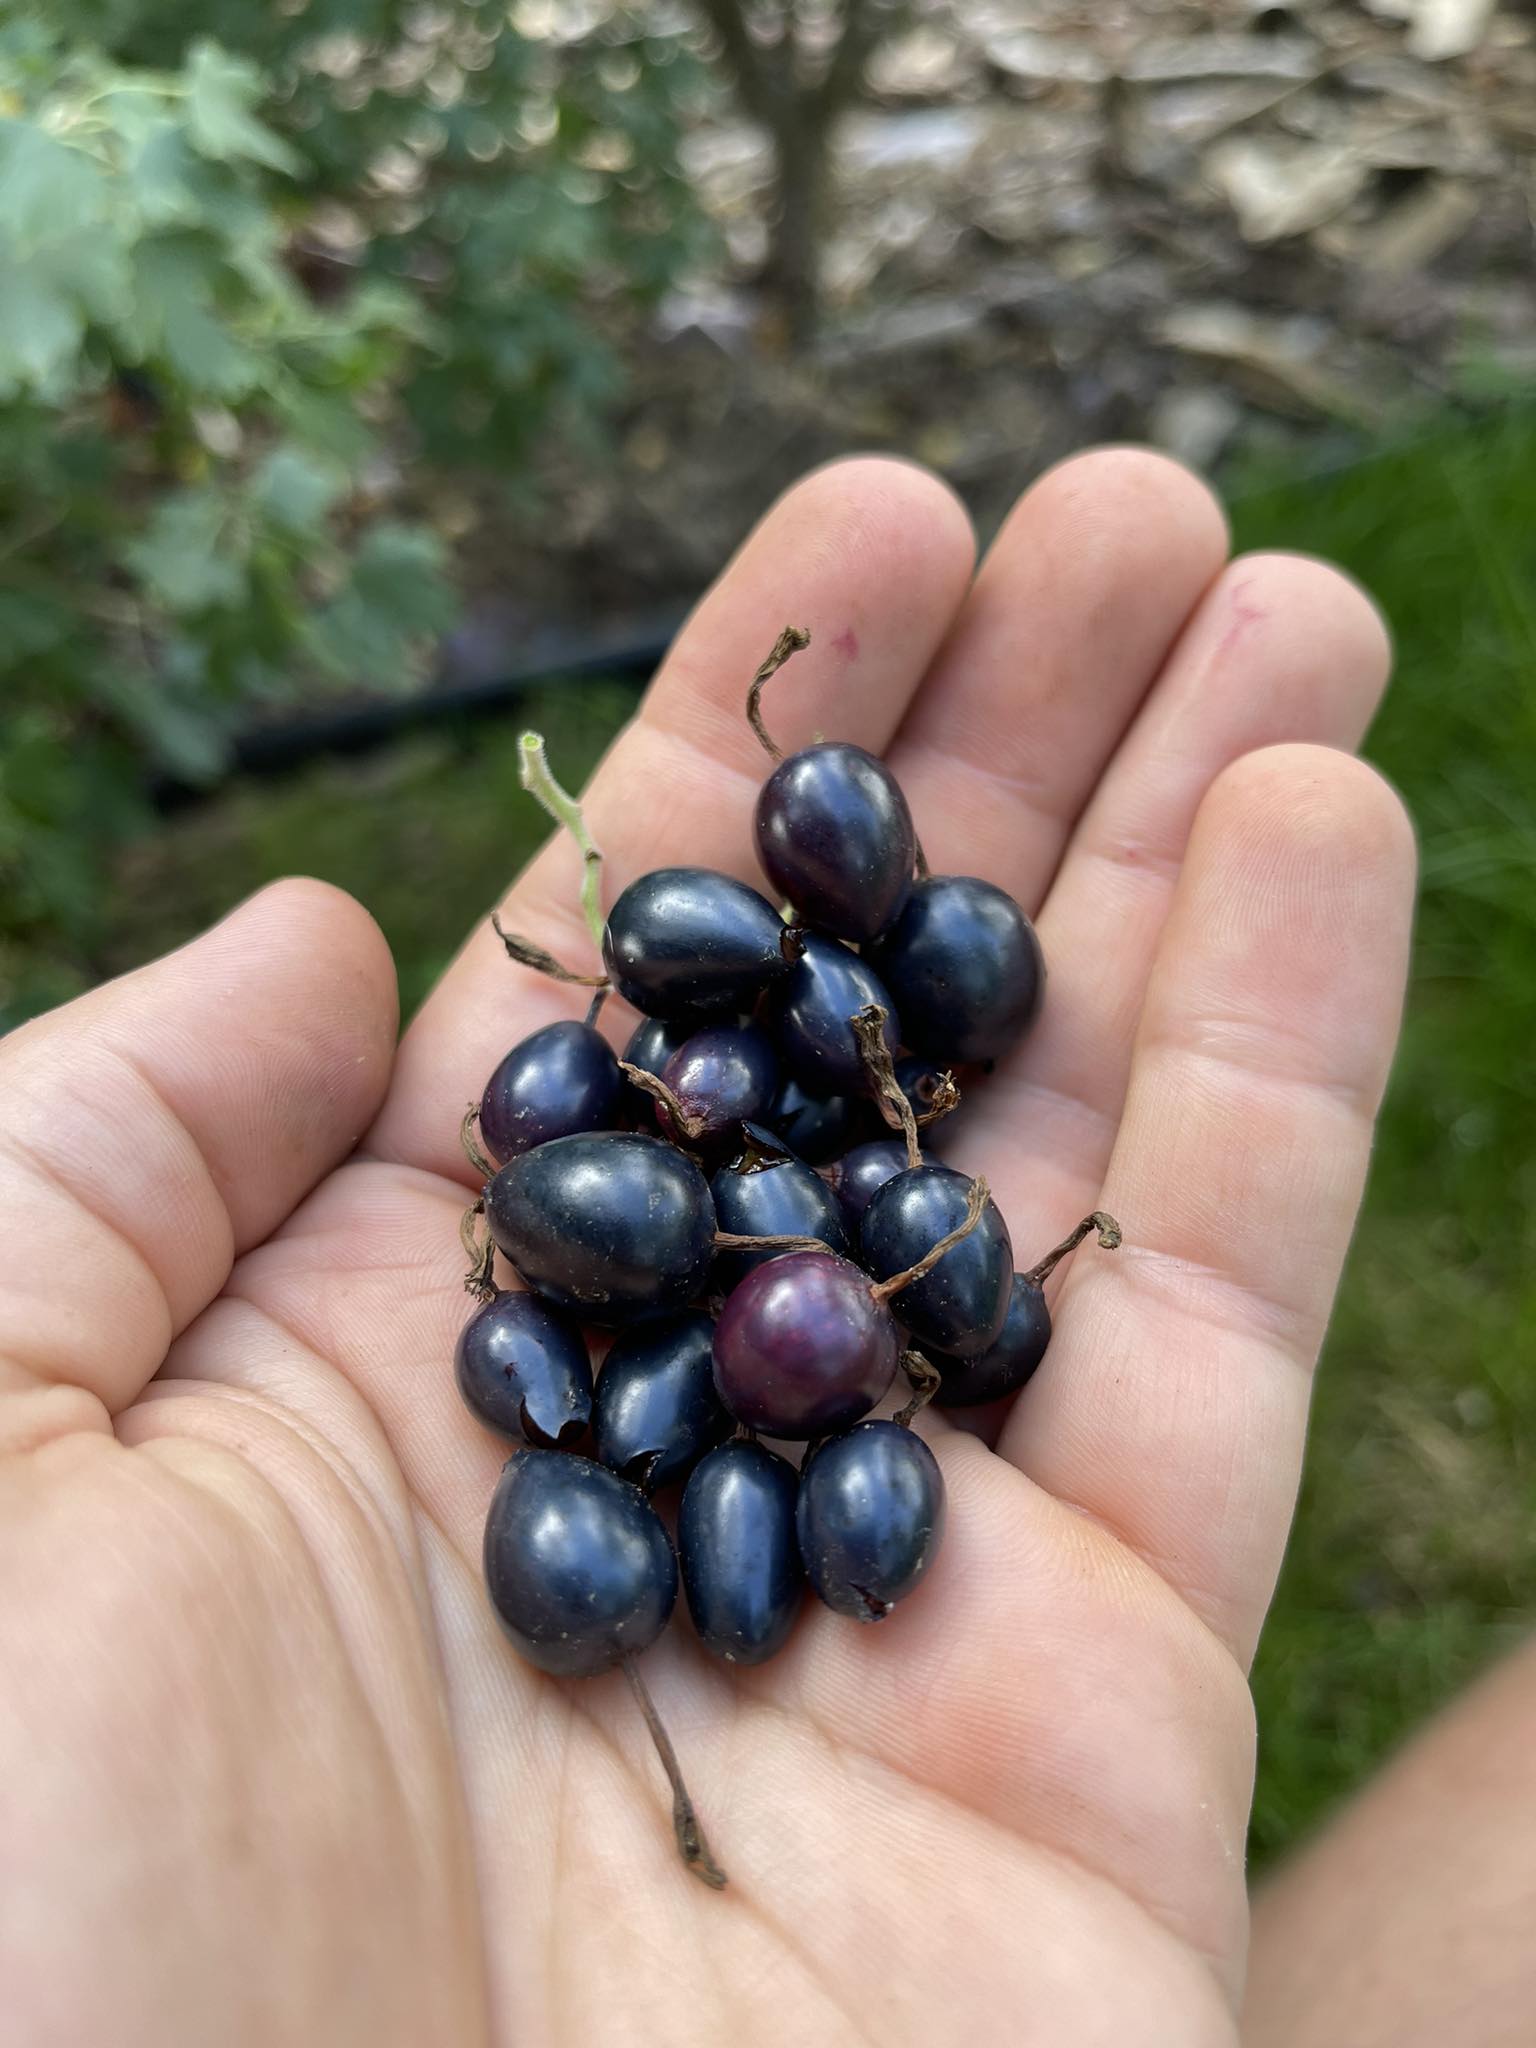 Meruzalka plodová, sem. odrůdy Gwens - Ribes aureum